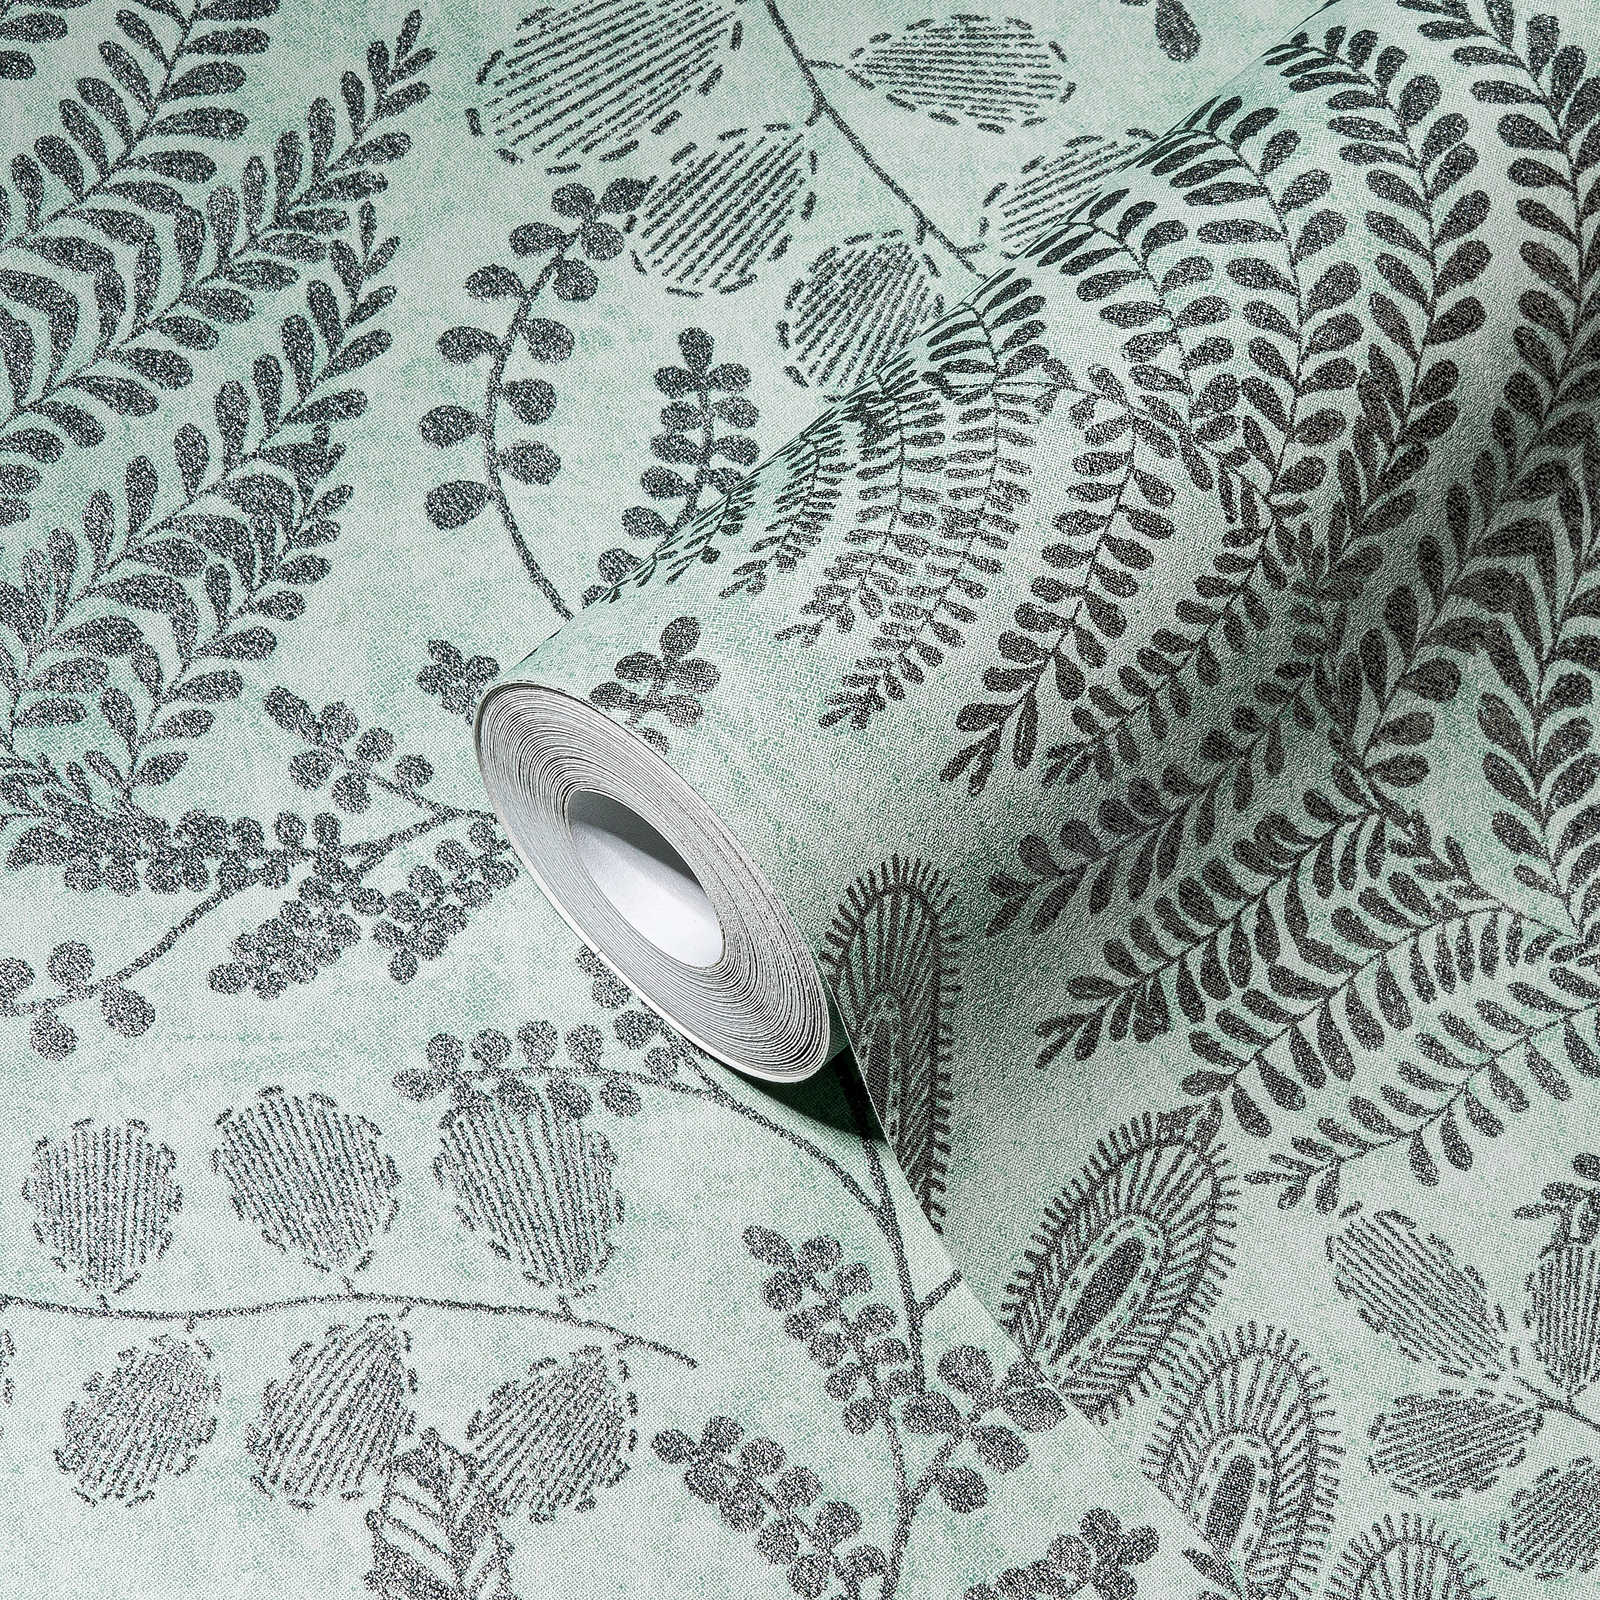             Skandi wallpaper with leaf pattern in metallic - blue, green
        